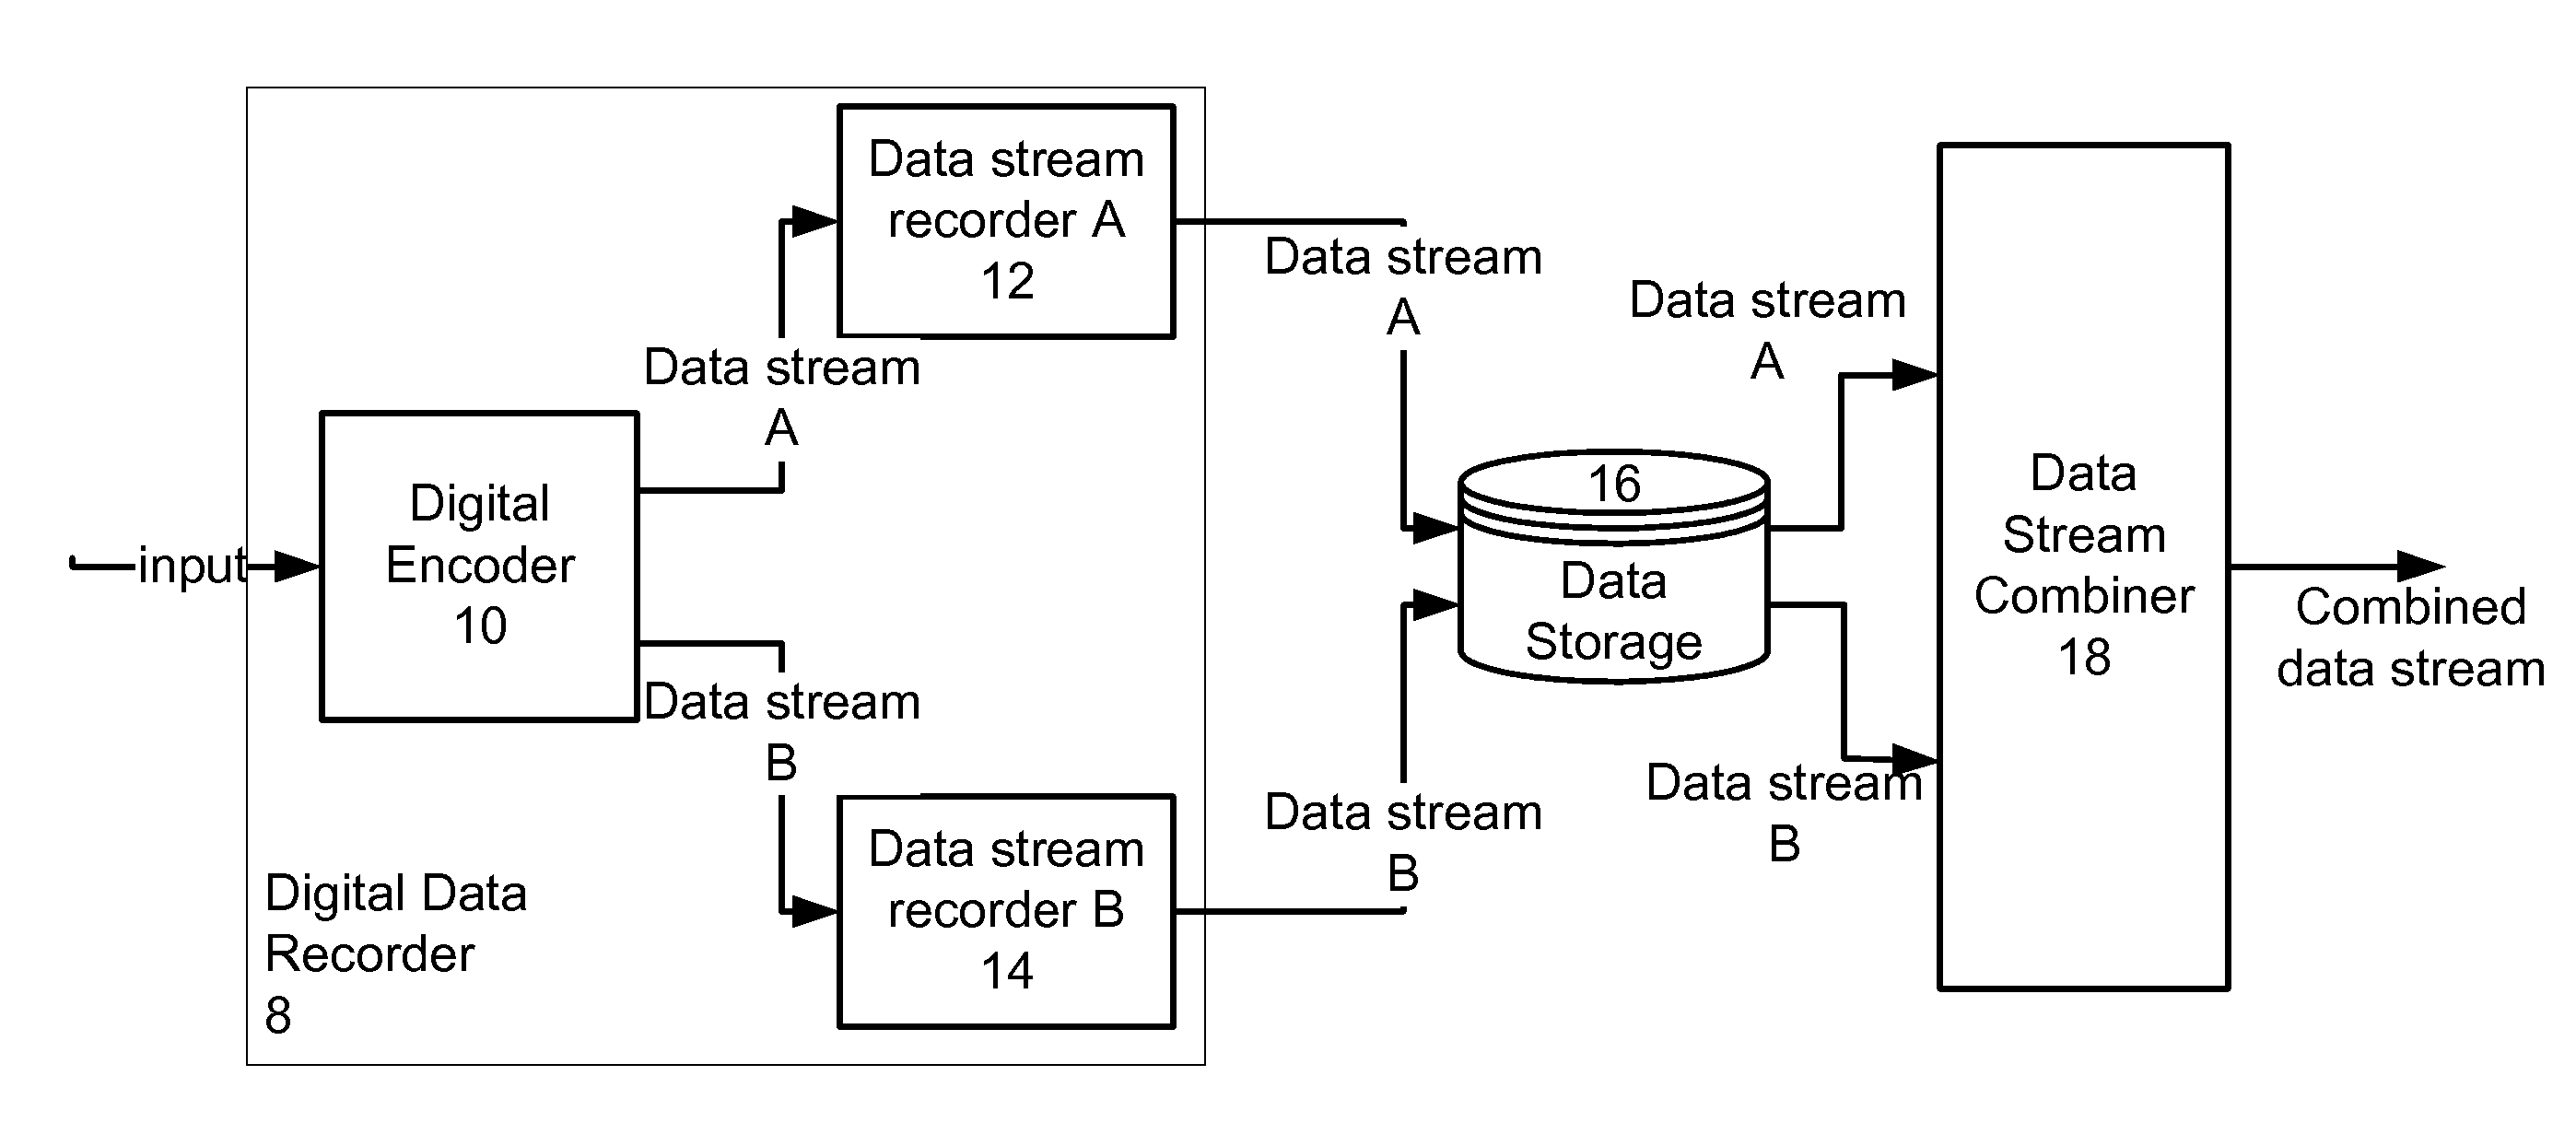 Hierarchical data storage